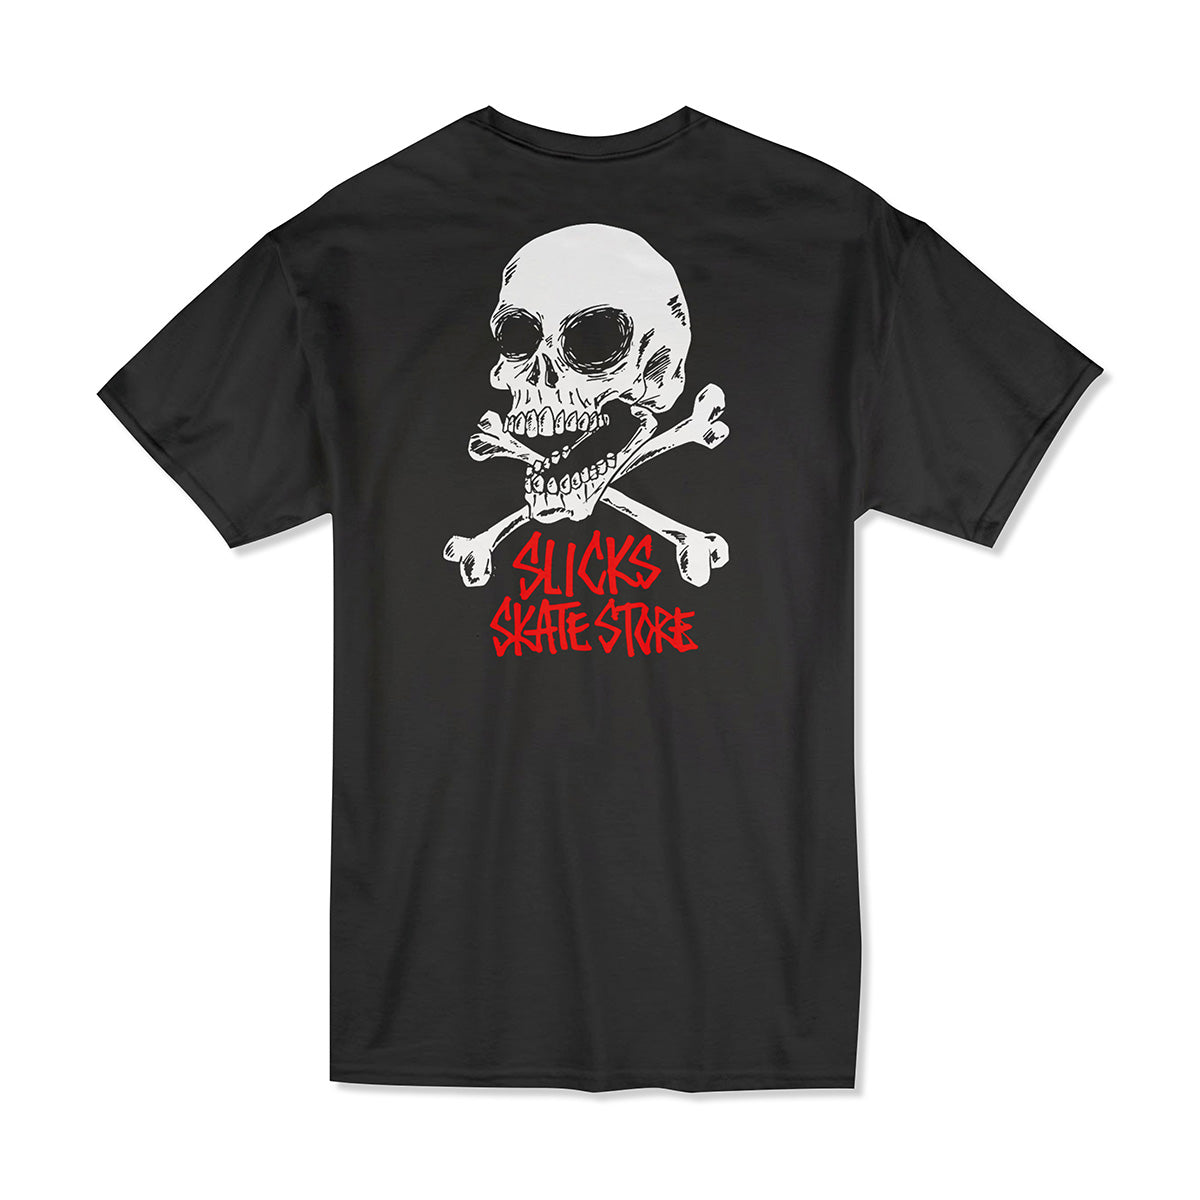 Slick's Skate Store Fos Crossbones T-Shirt - Black